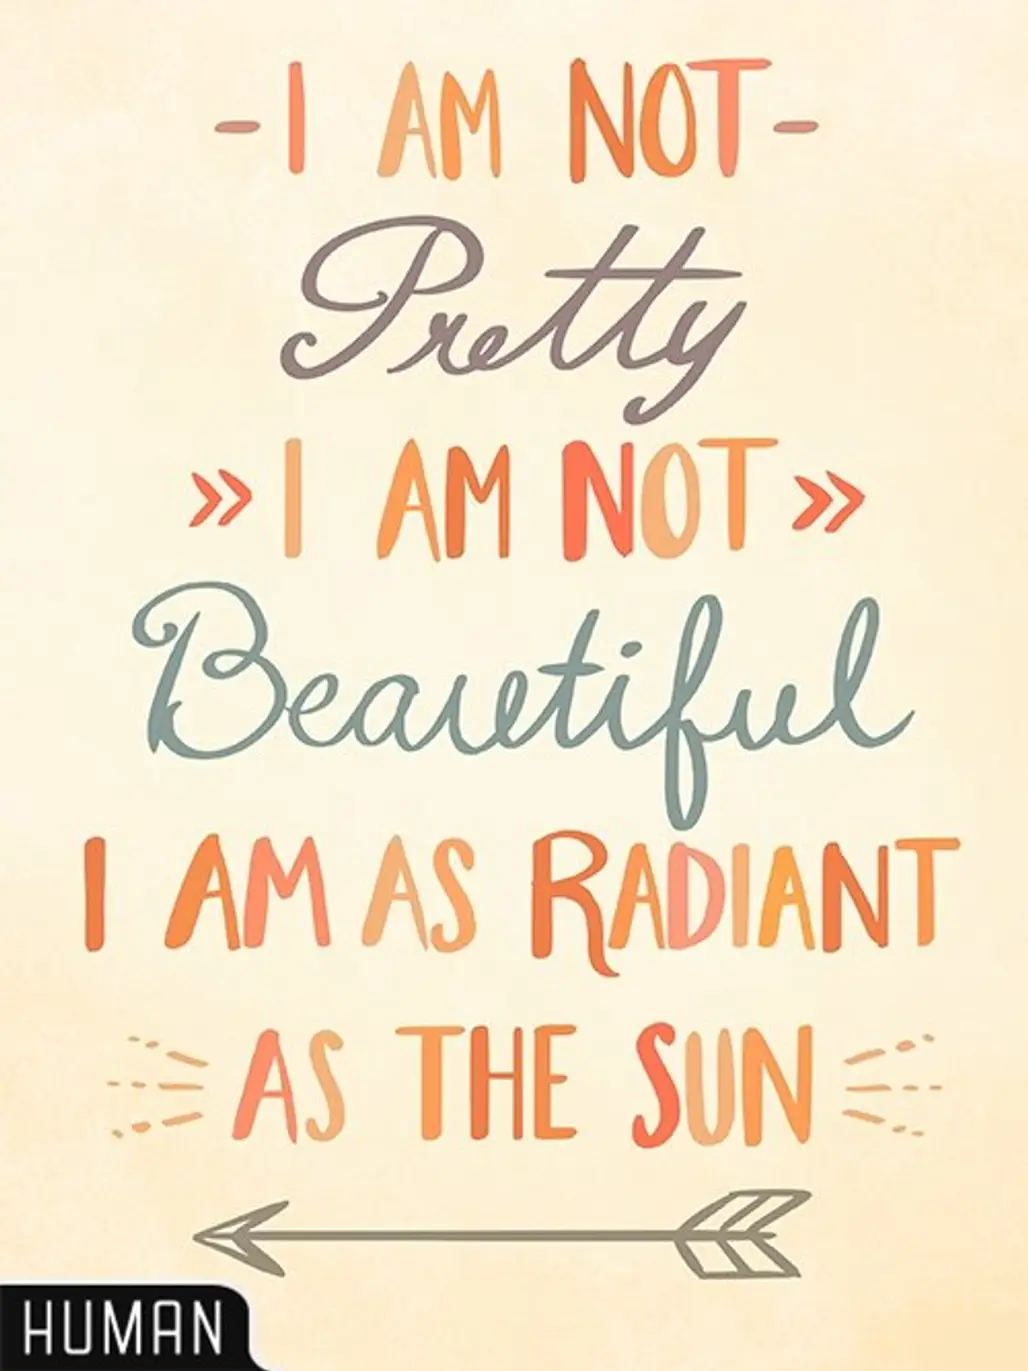 I Am as Radiant as the Sun